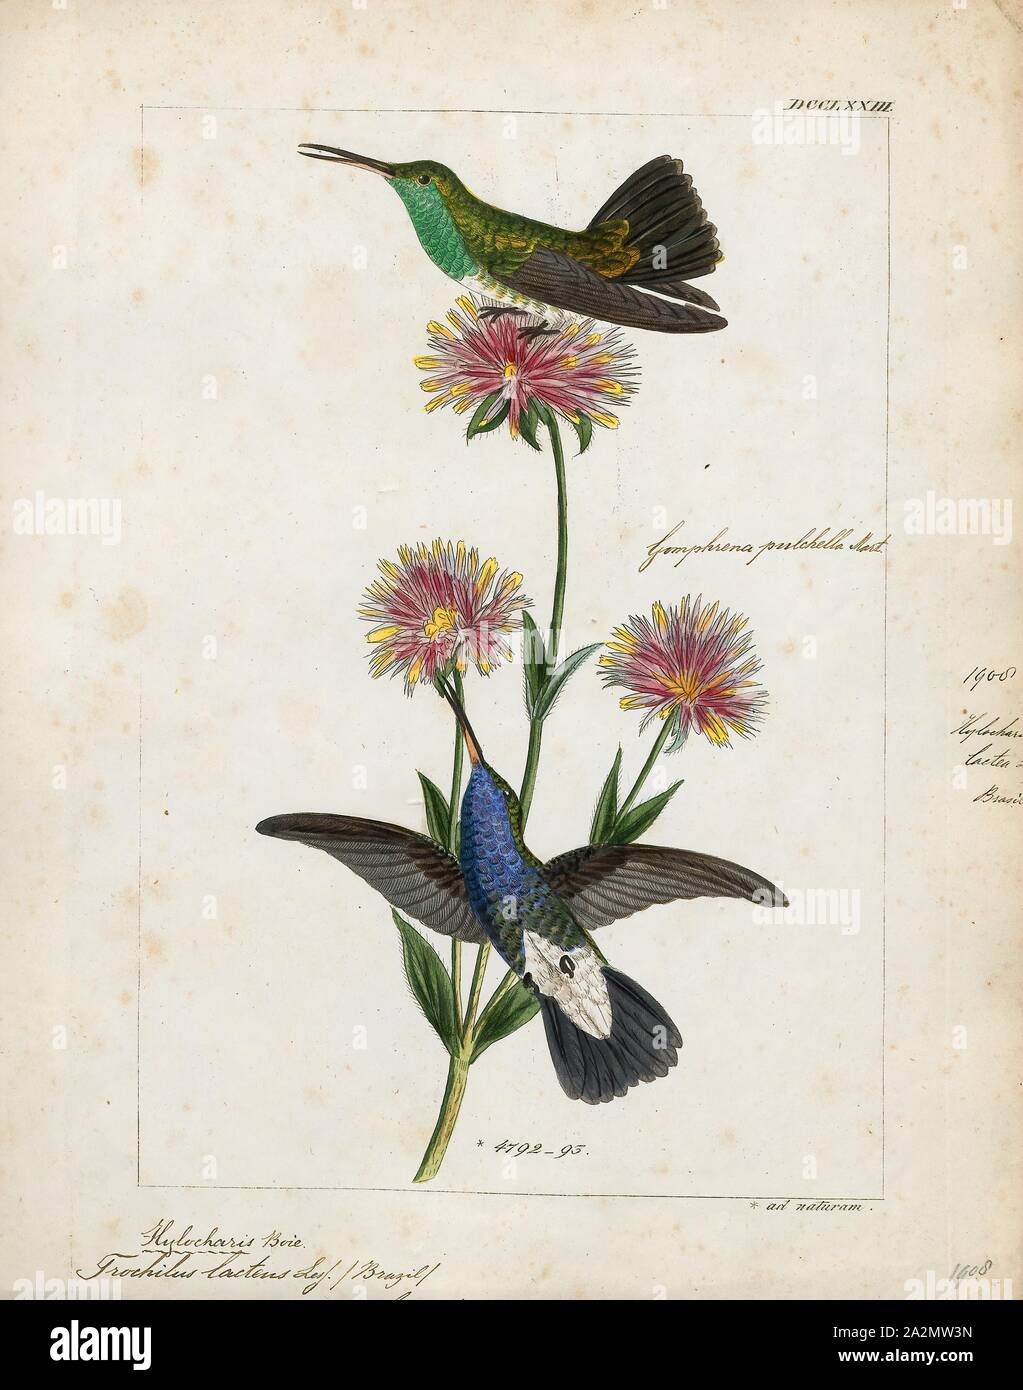 Hylocharis lactea, Print, Hylocharis is a genus of hummingbird, in the family Trochilidae., 1820-1860 Stock Photo